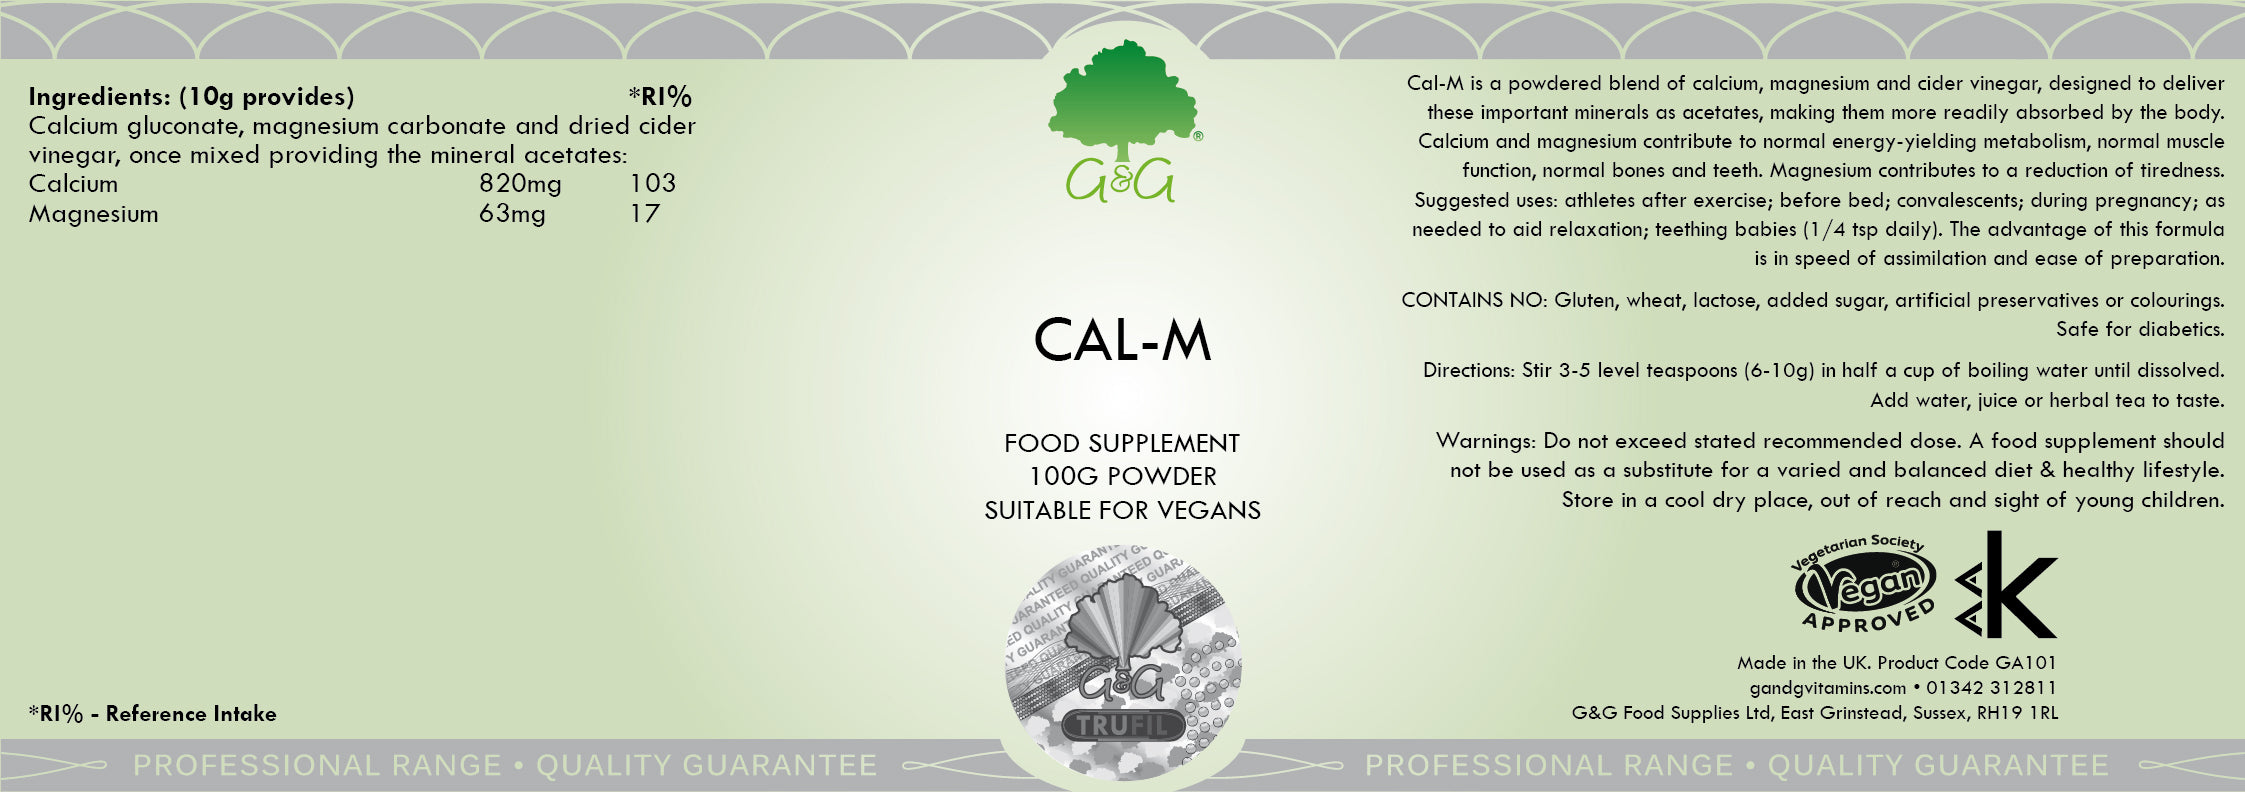 G&G Vitamins Cal-M Powder